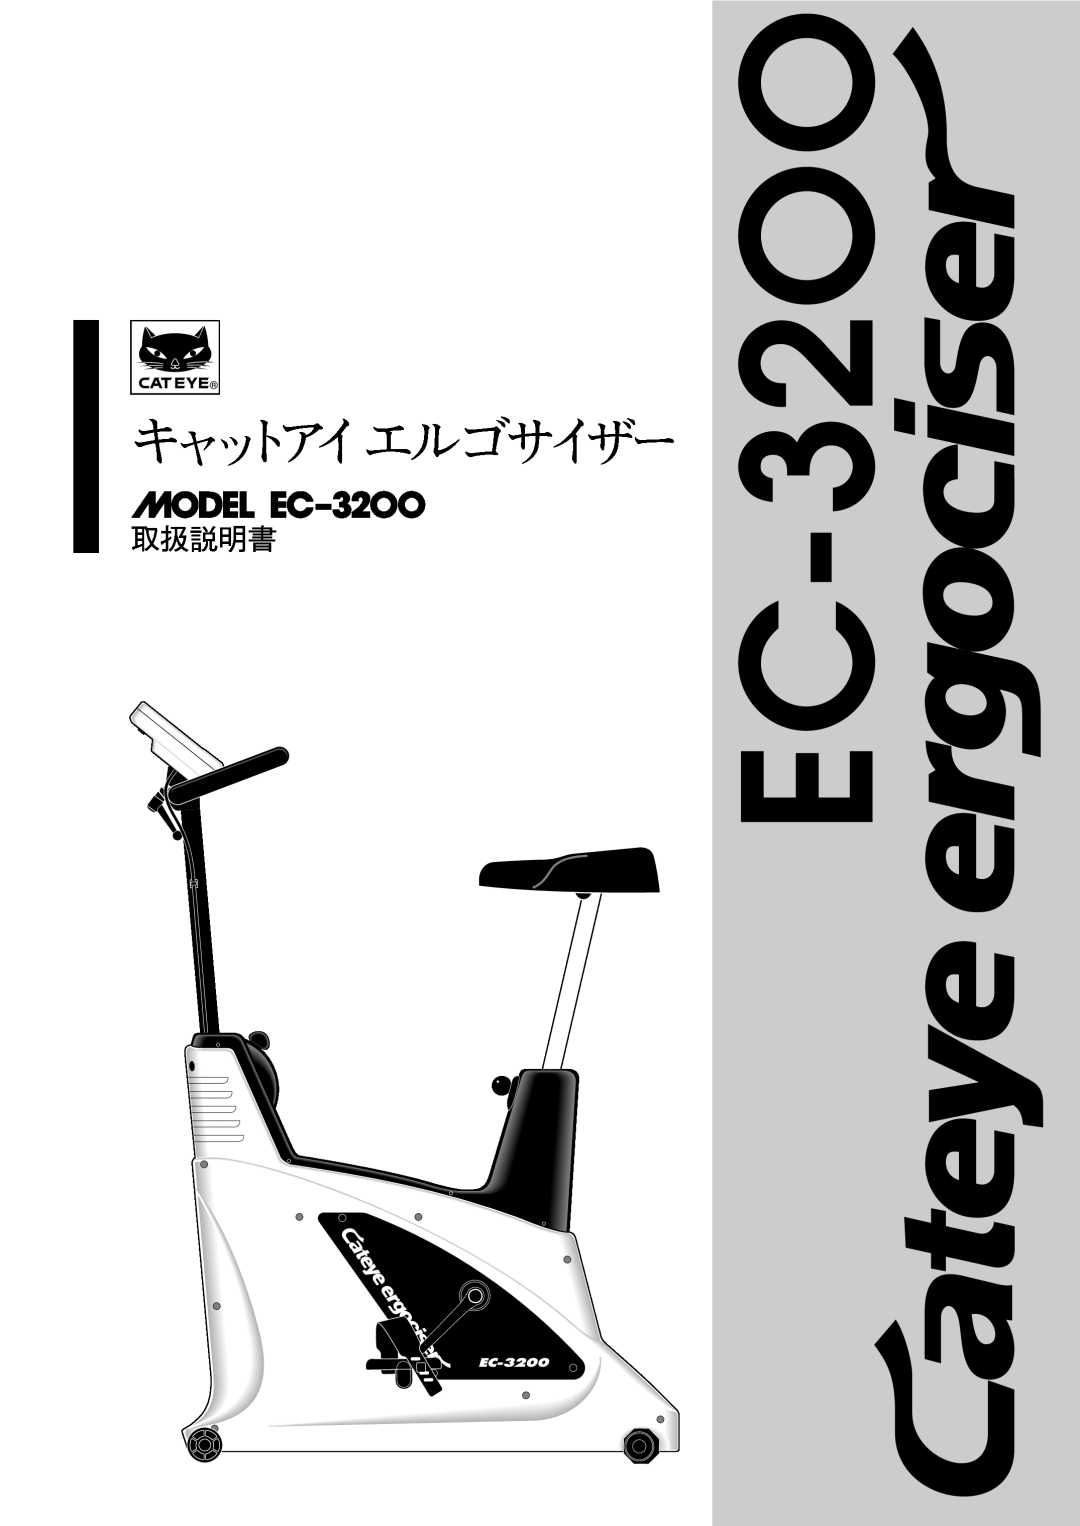 Cateye EC-32OO manual 取扱説明書, キャットアイエルゴサイザー, EC-3200 